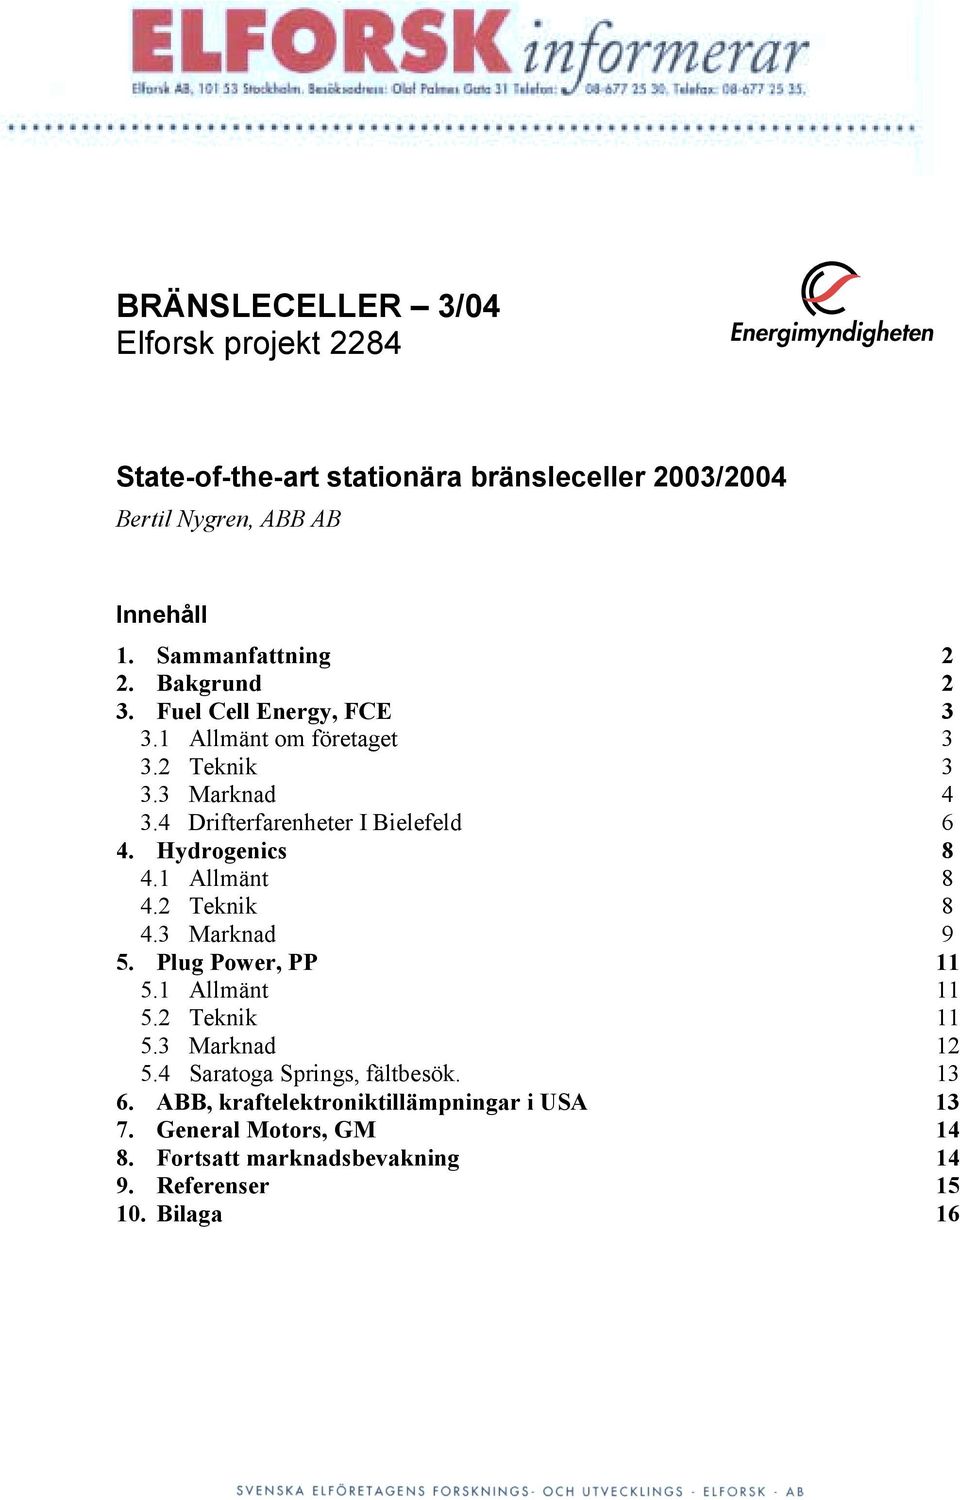 4 Drifterfarenheter I Bielefeld 6 4. Hydrogenics 8 4.1 Allmänt 8 4.2 Teknik 8 4.3 Marknad 9 5. Plug Power, PP 11 5.1 Allmänt 11 5.